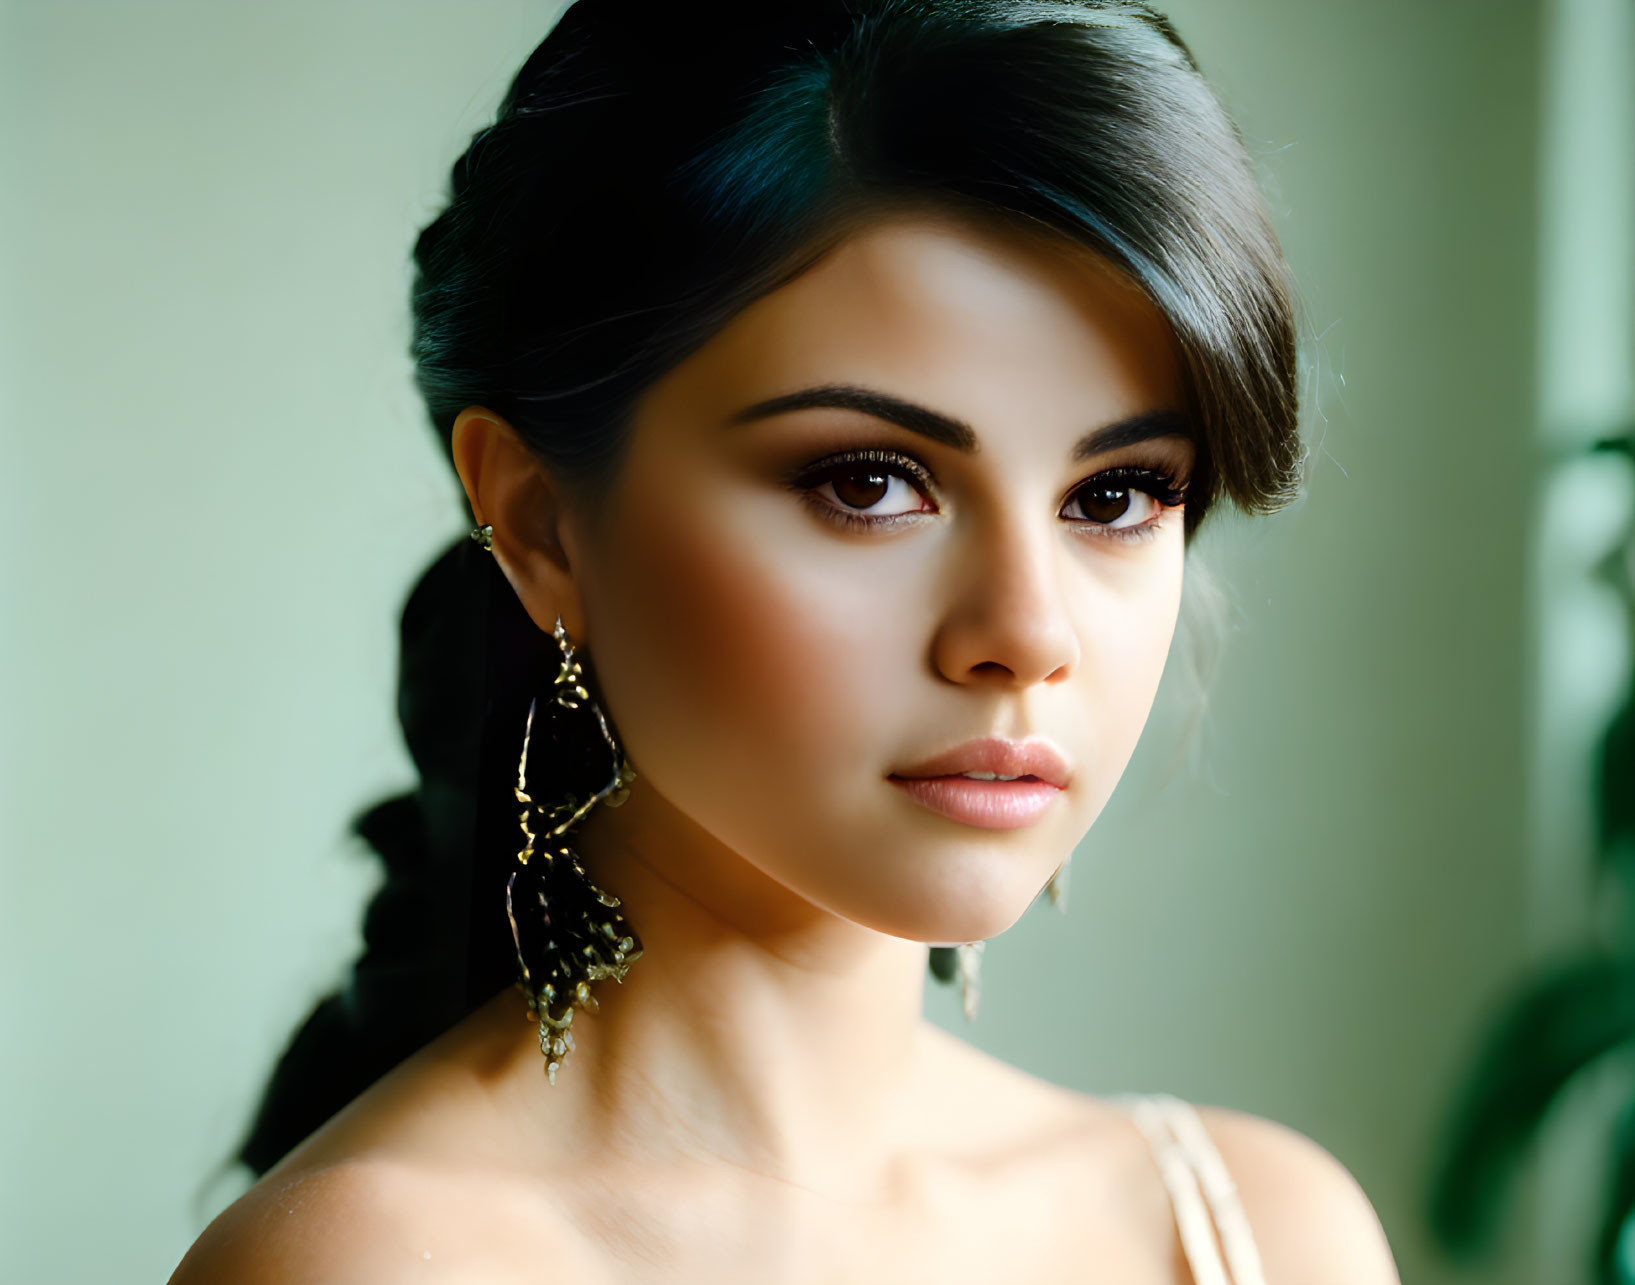 Selena Gomez as Disney's Princess